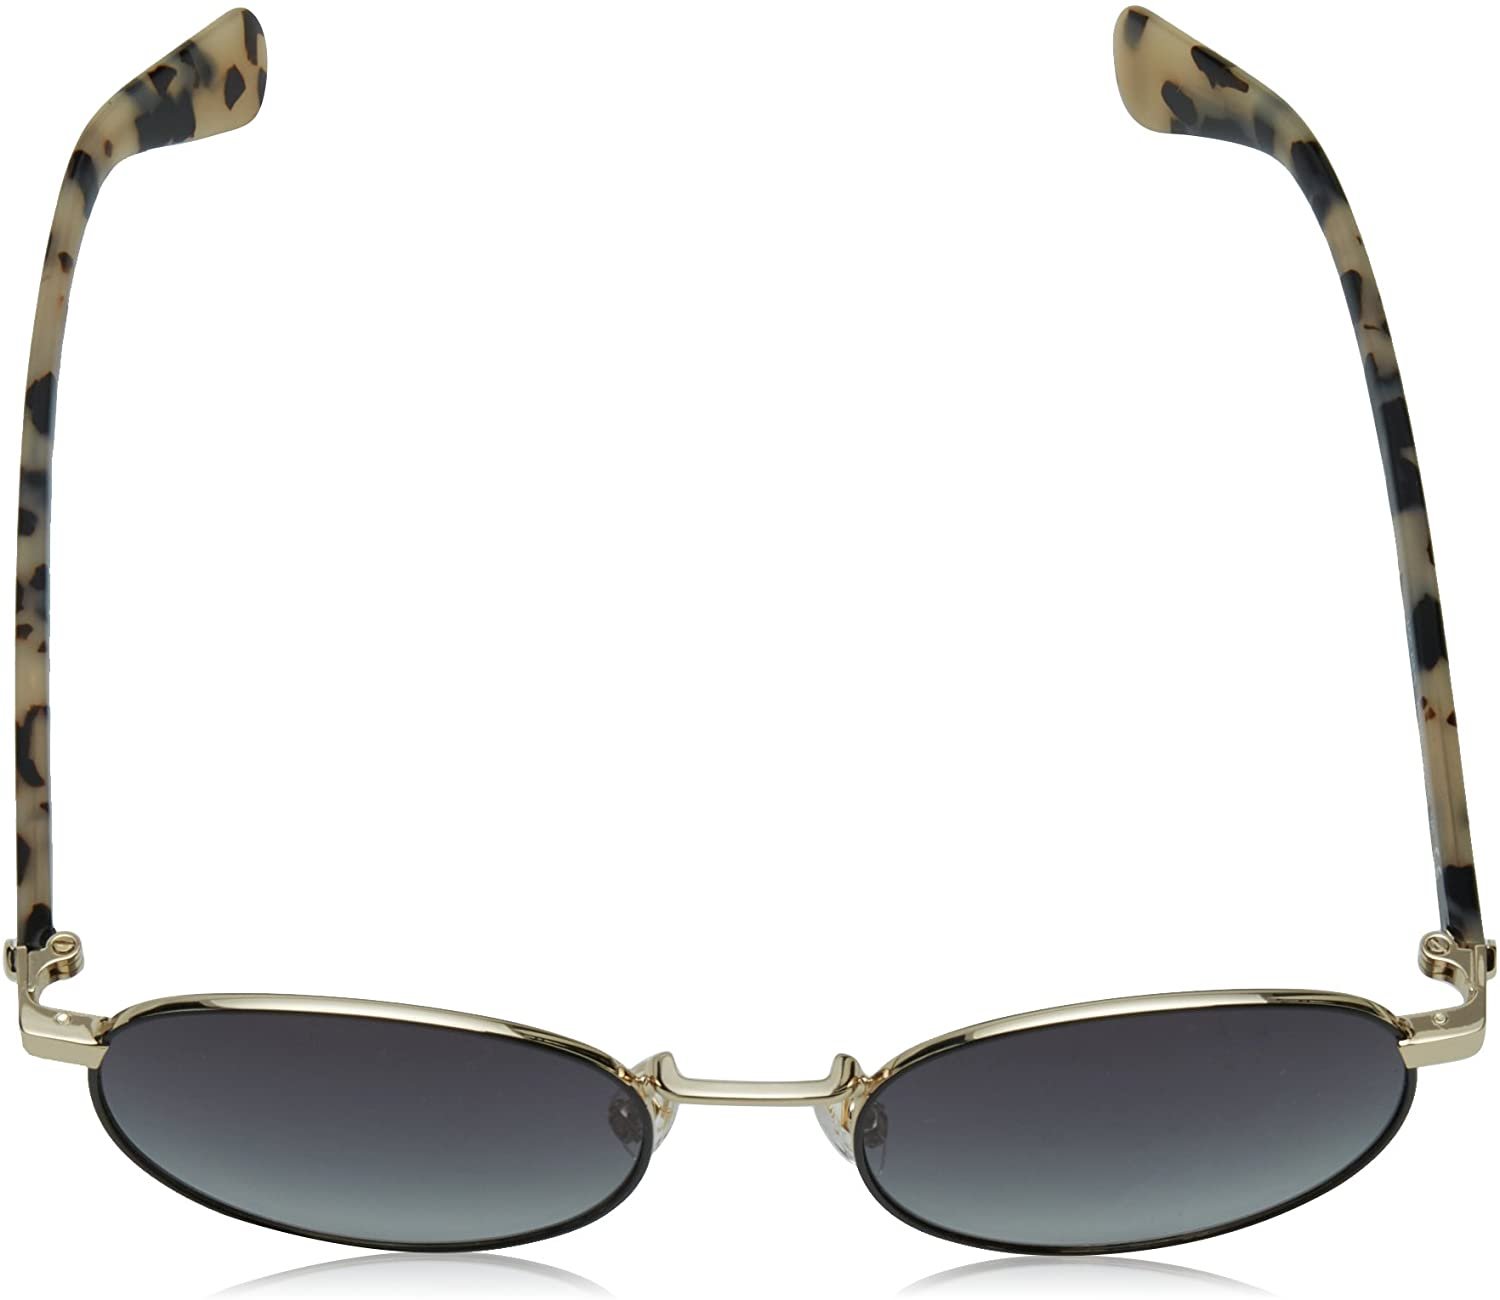 Kate Spade New York Women's Adelais Oval Sunglasses, BLK HAVAN, 50 mm - image 4 of 4